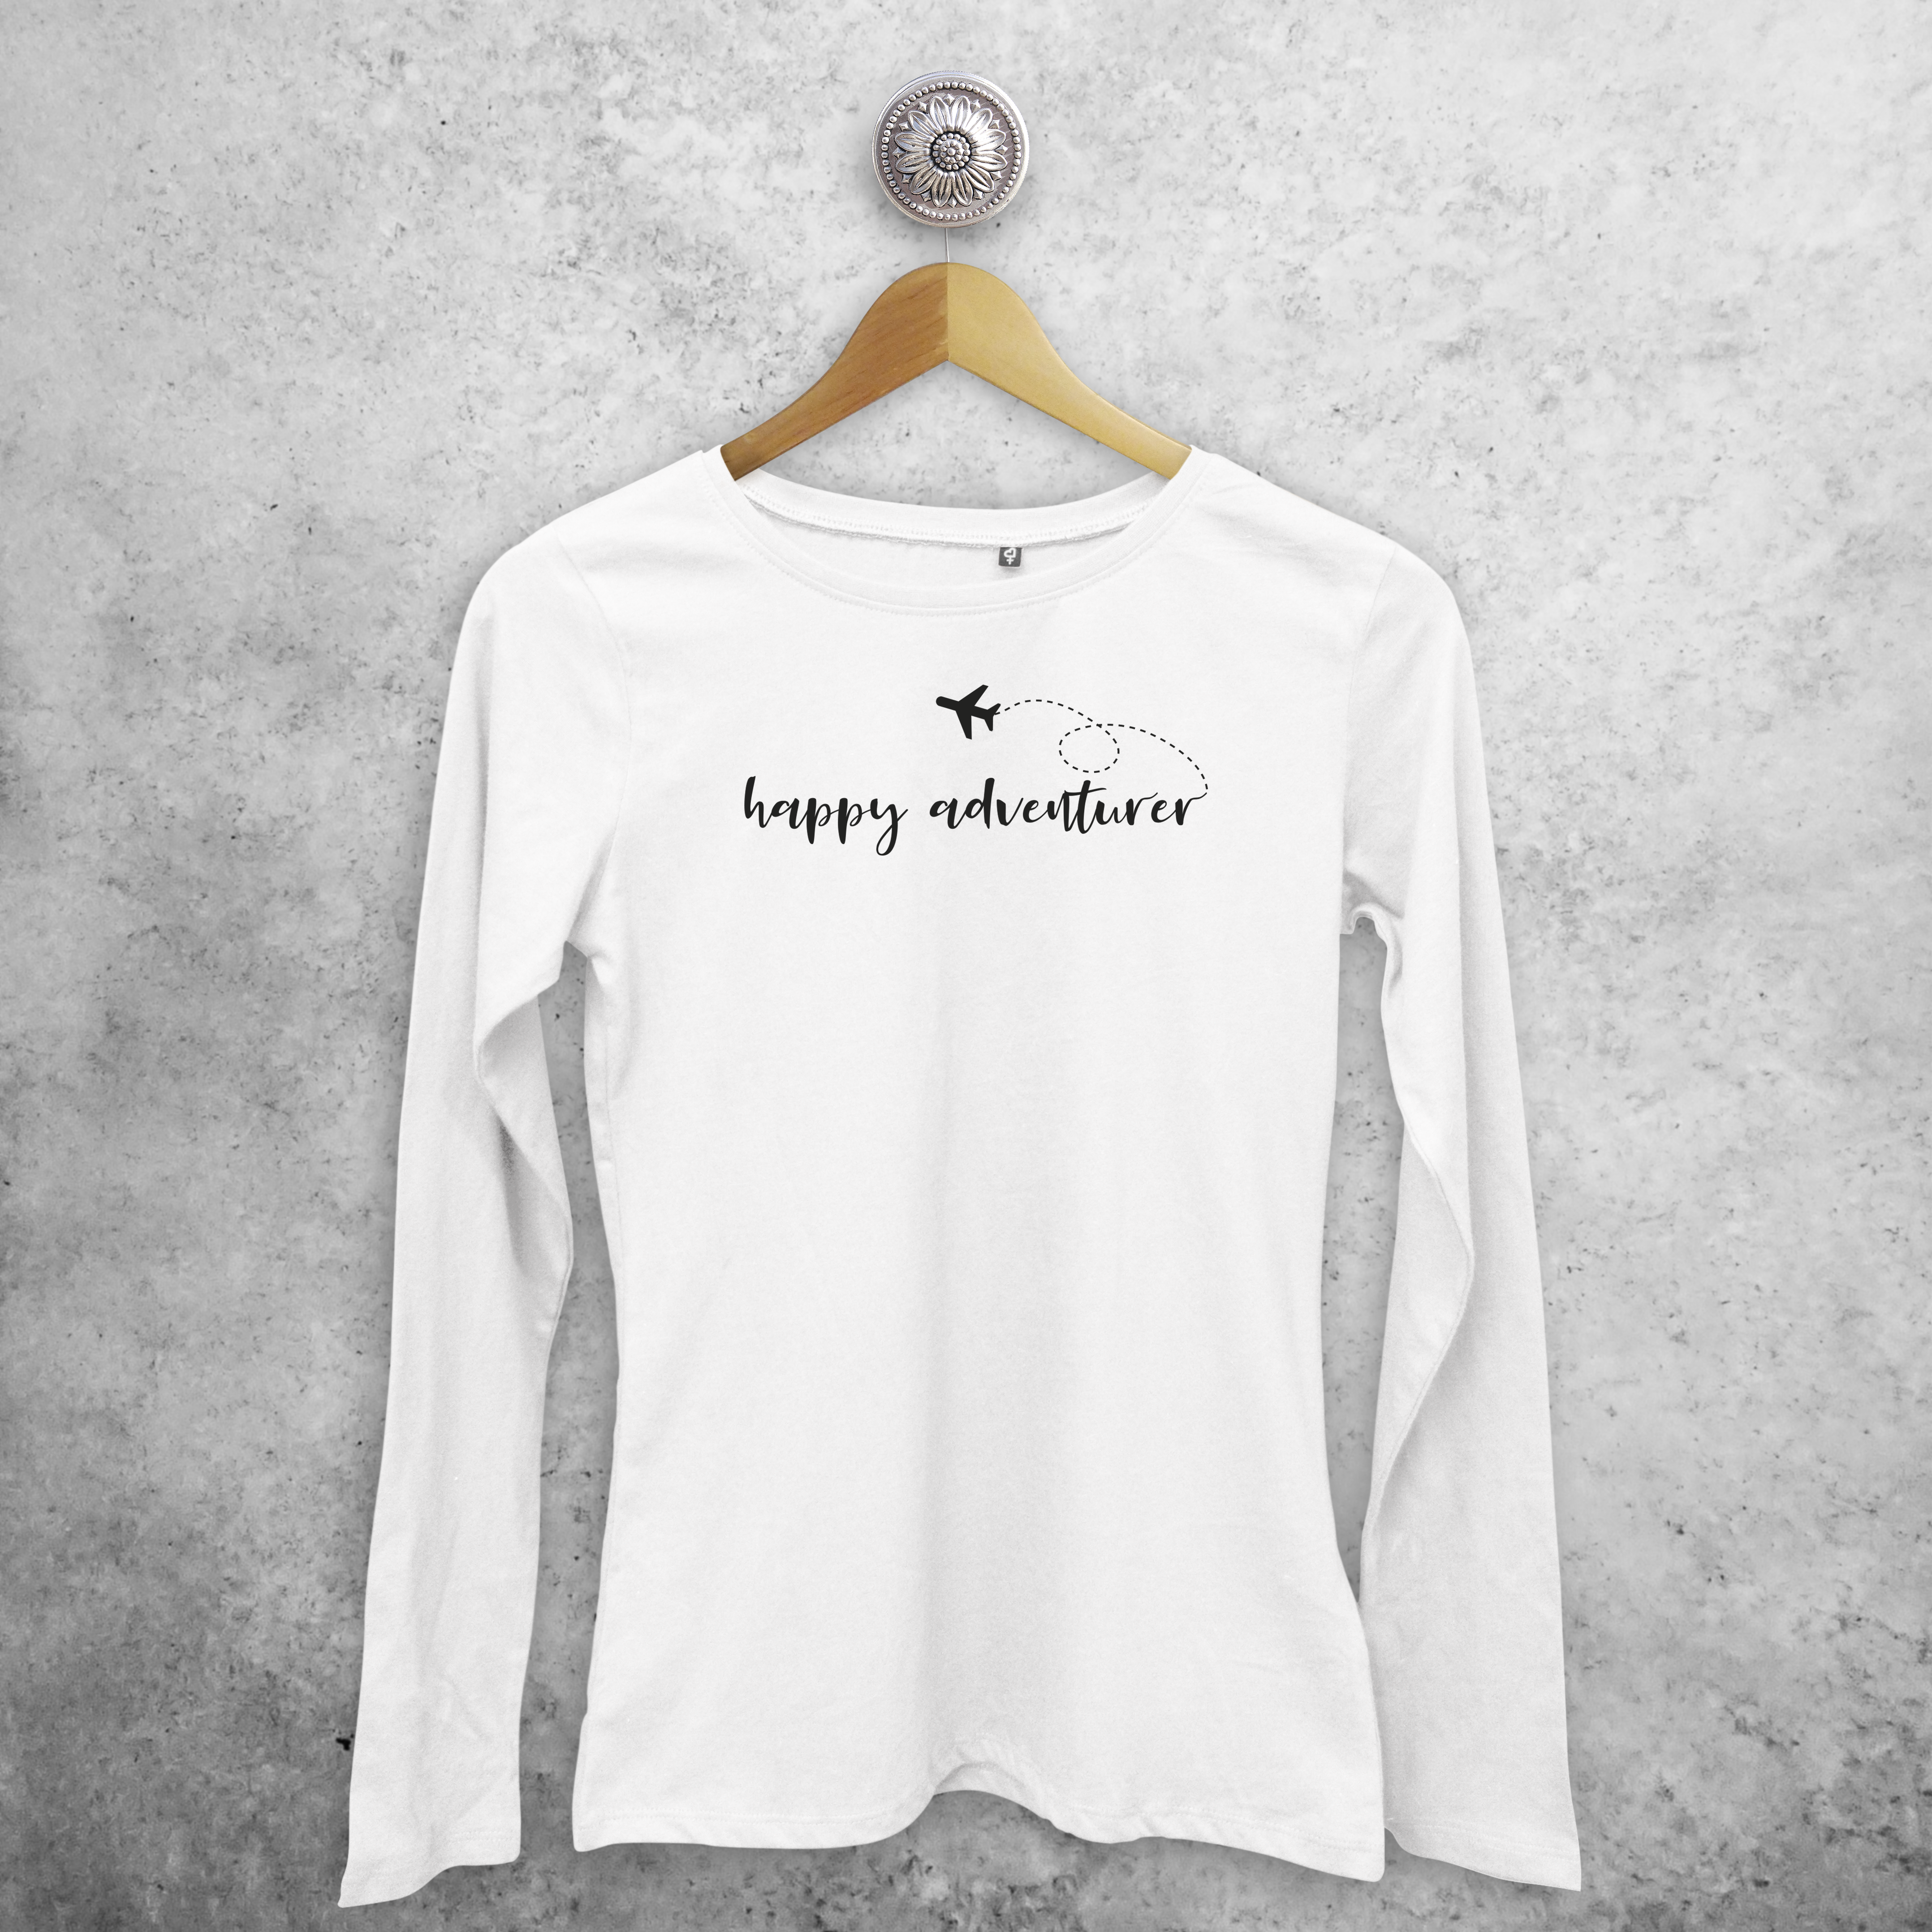 'Happy adventurer' adult longsleeve shirt